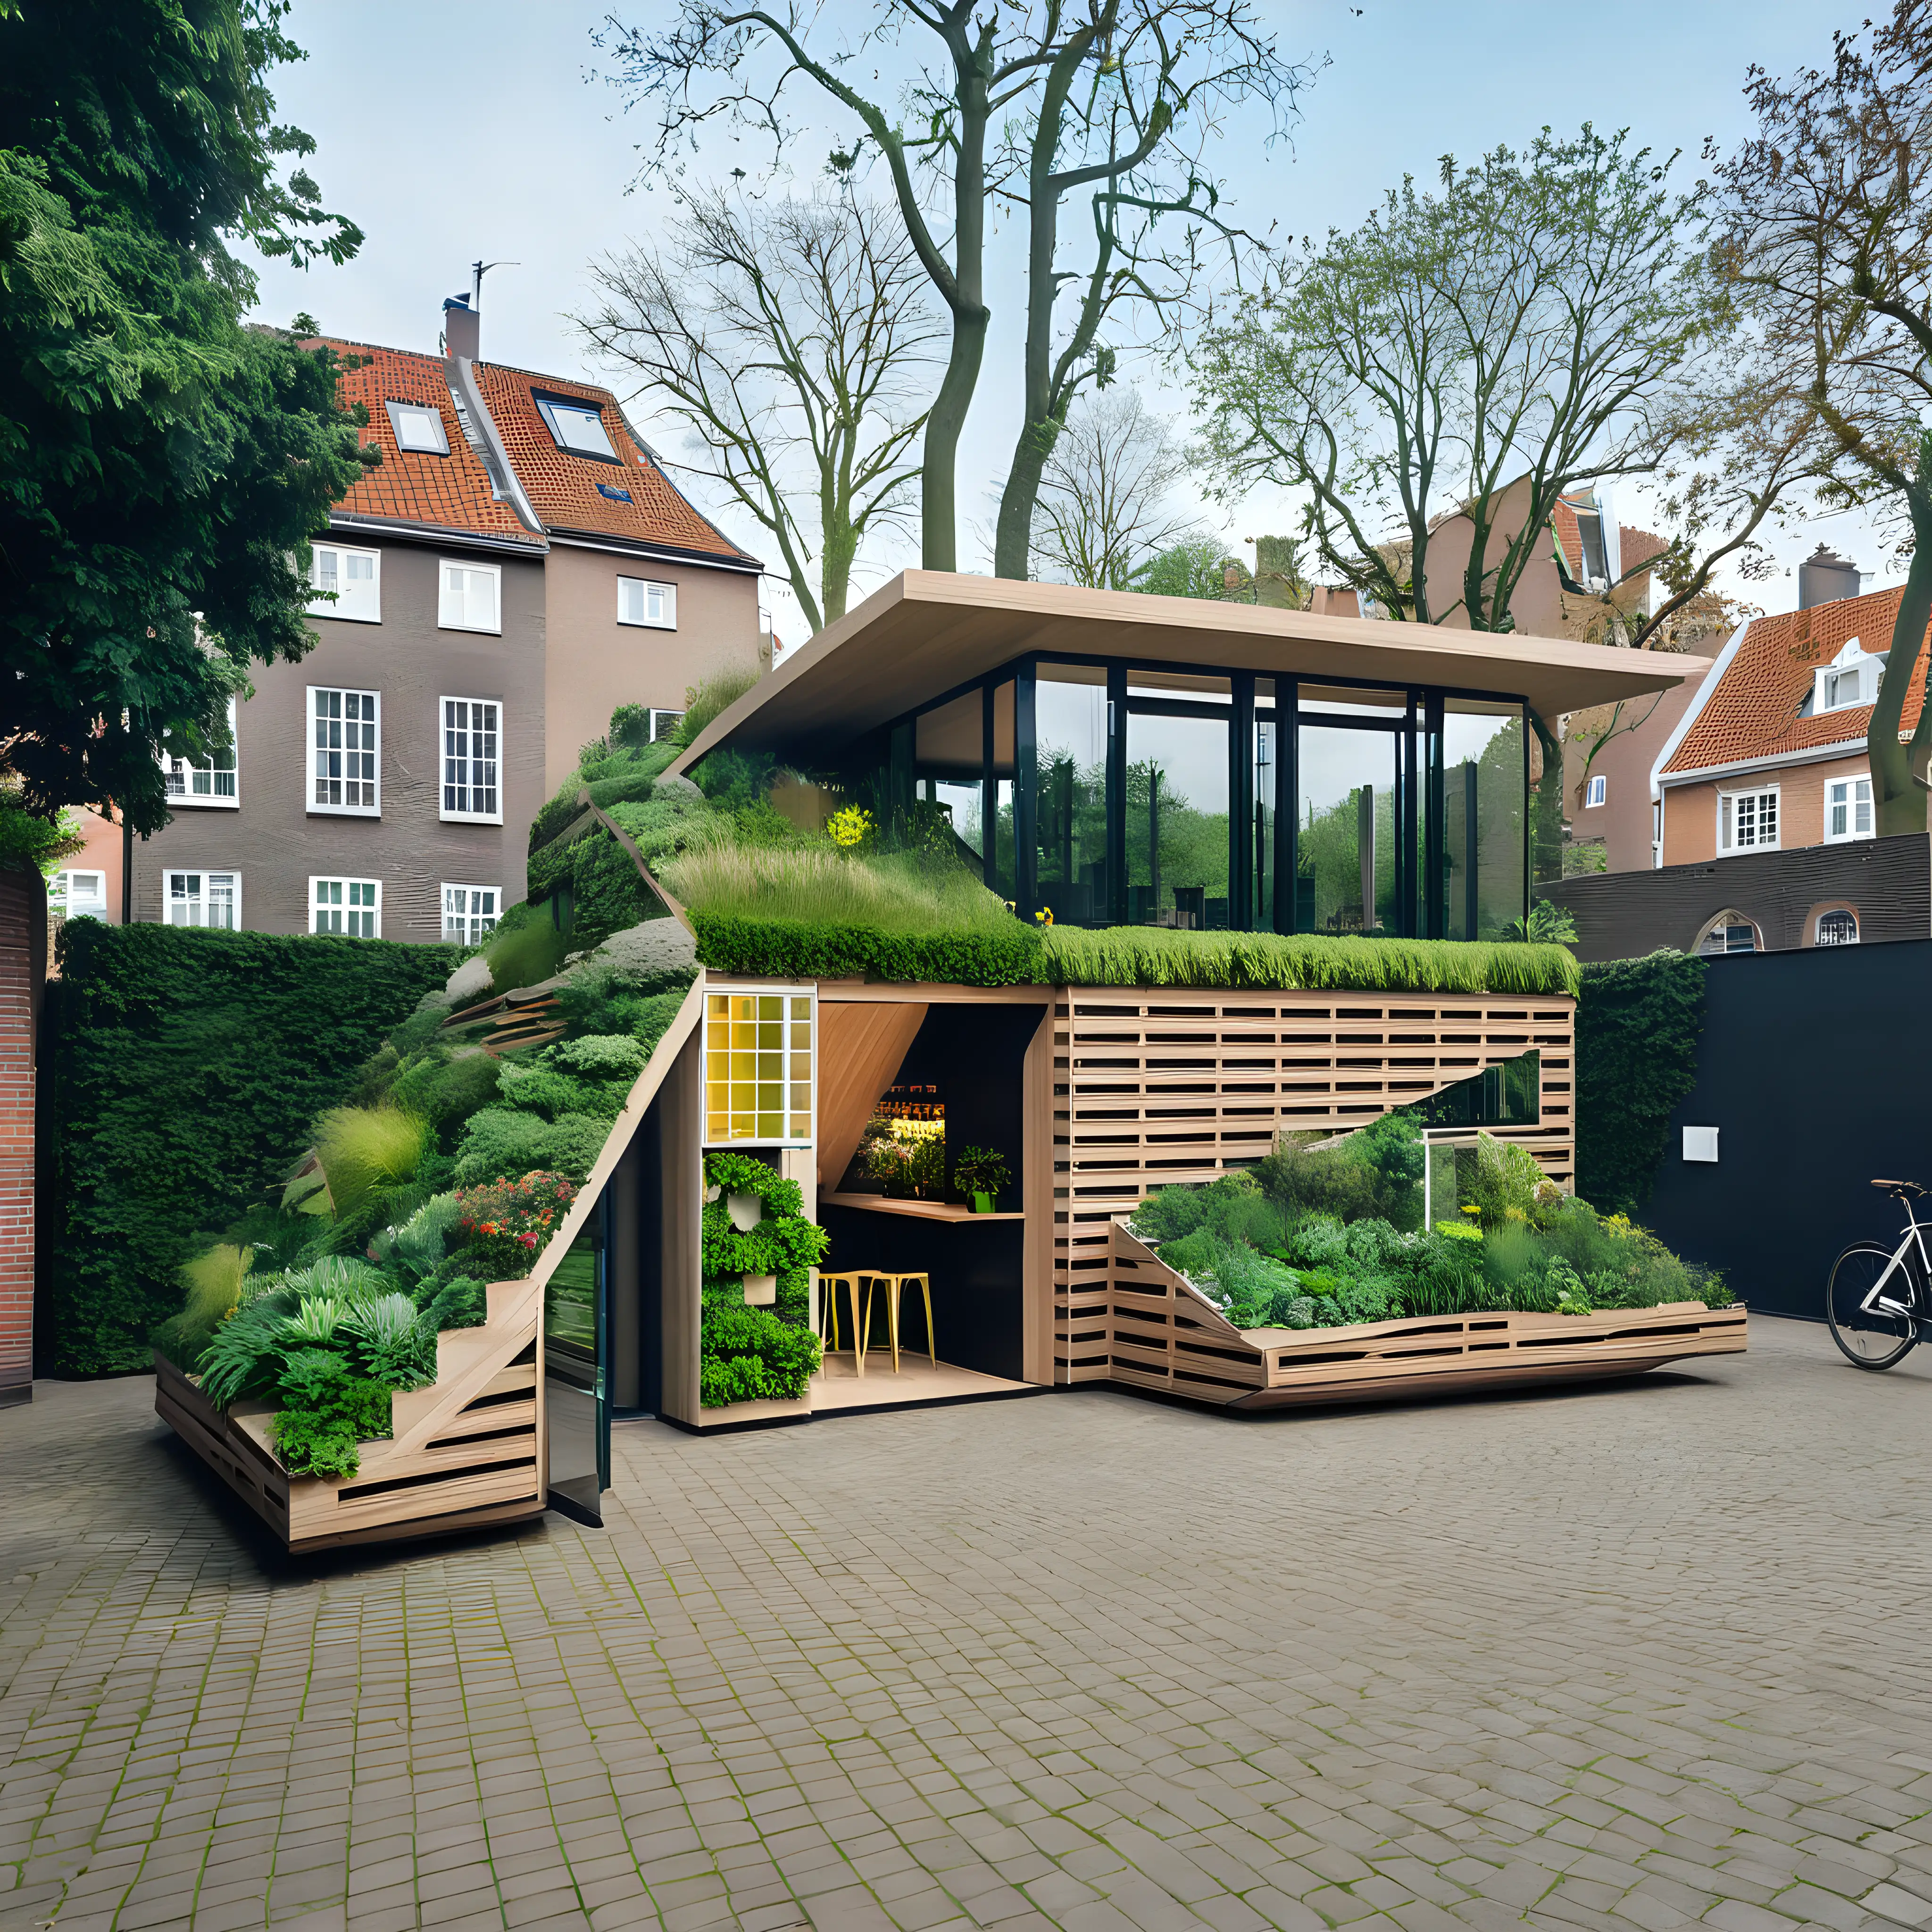 Imagine a tiny garden folly in de style of MVRDV architect on top or above this buiding.